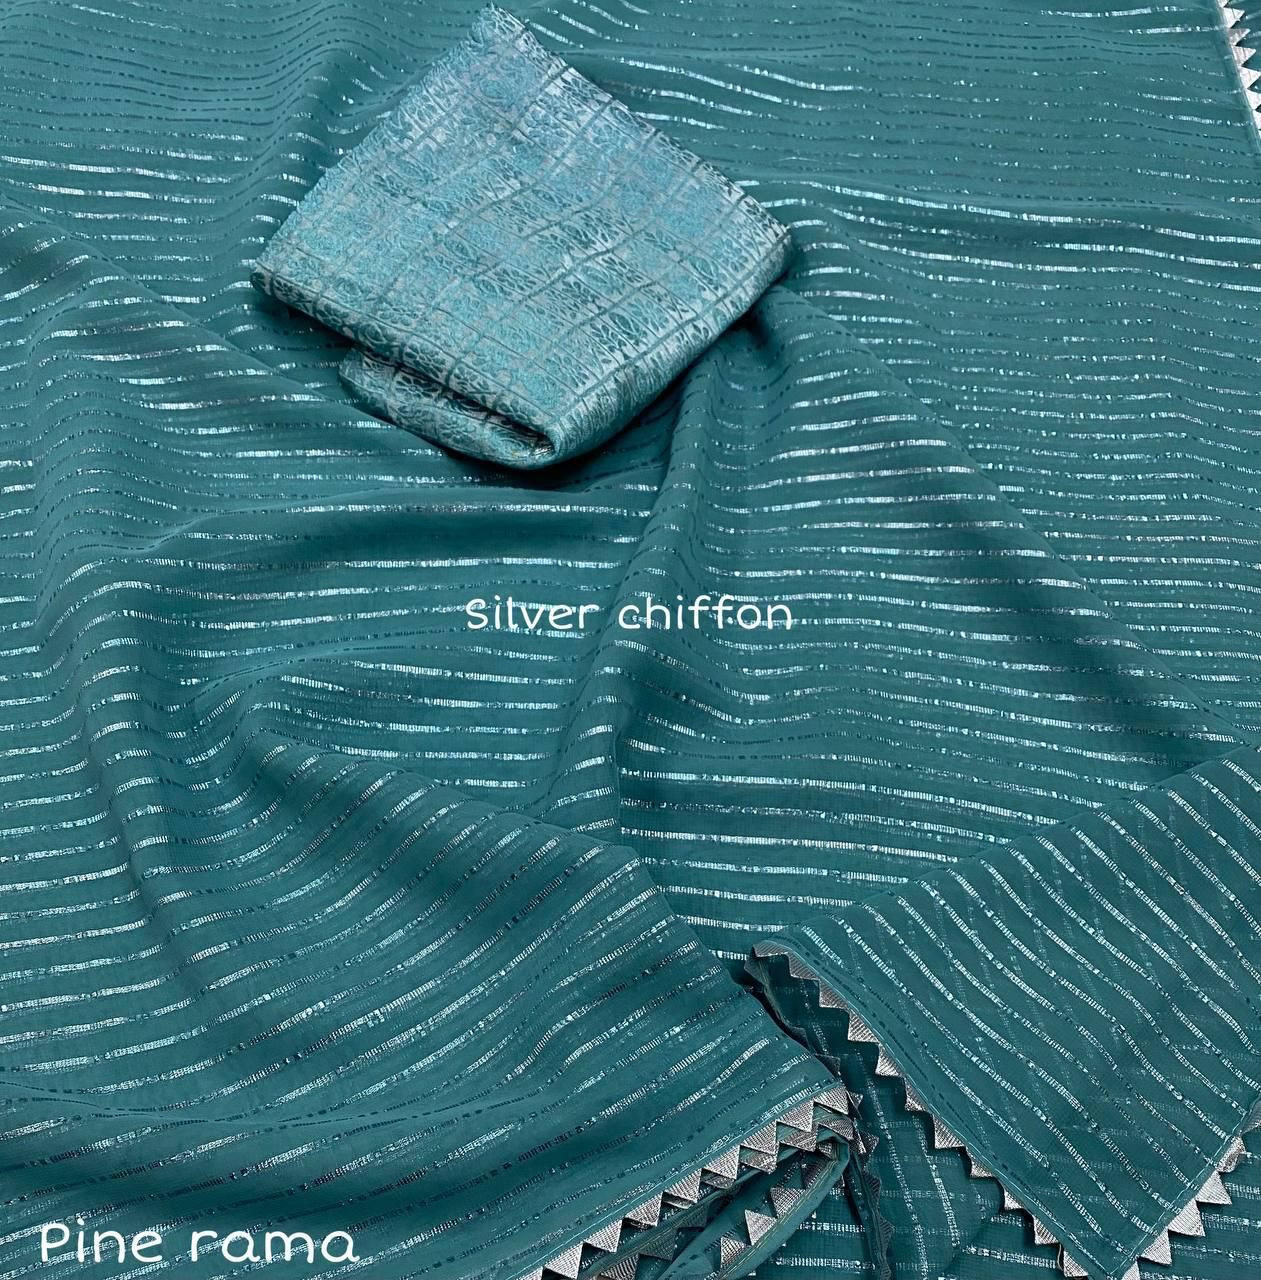 Soft Chiffon Saree with silver zari weaving & Temple Border - Blue